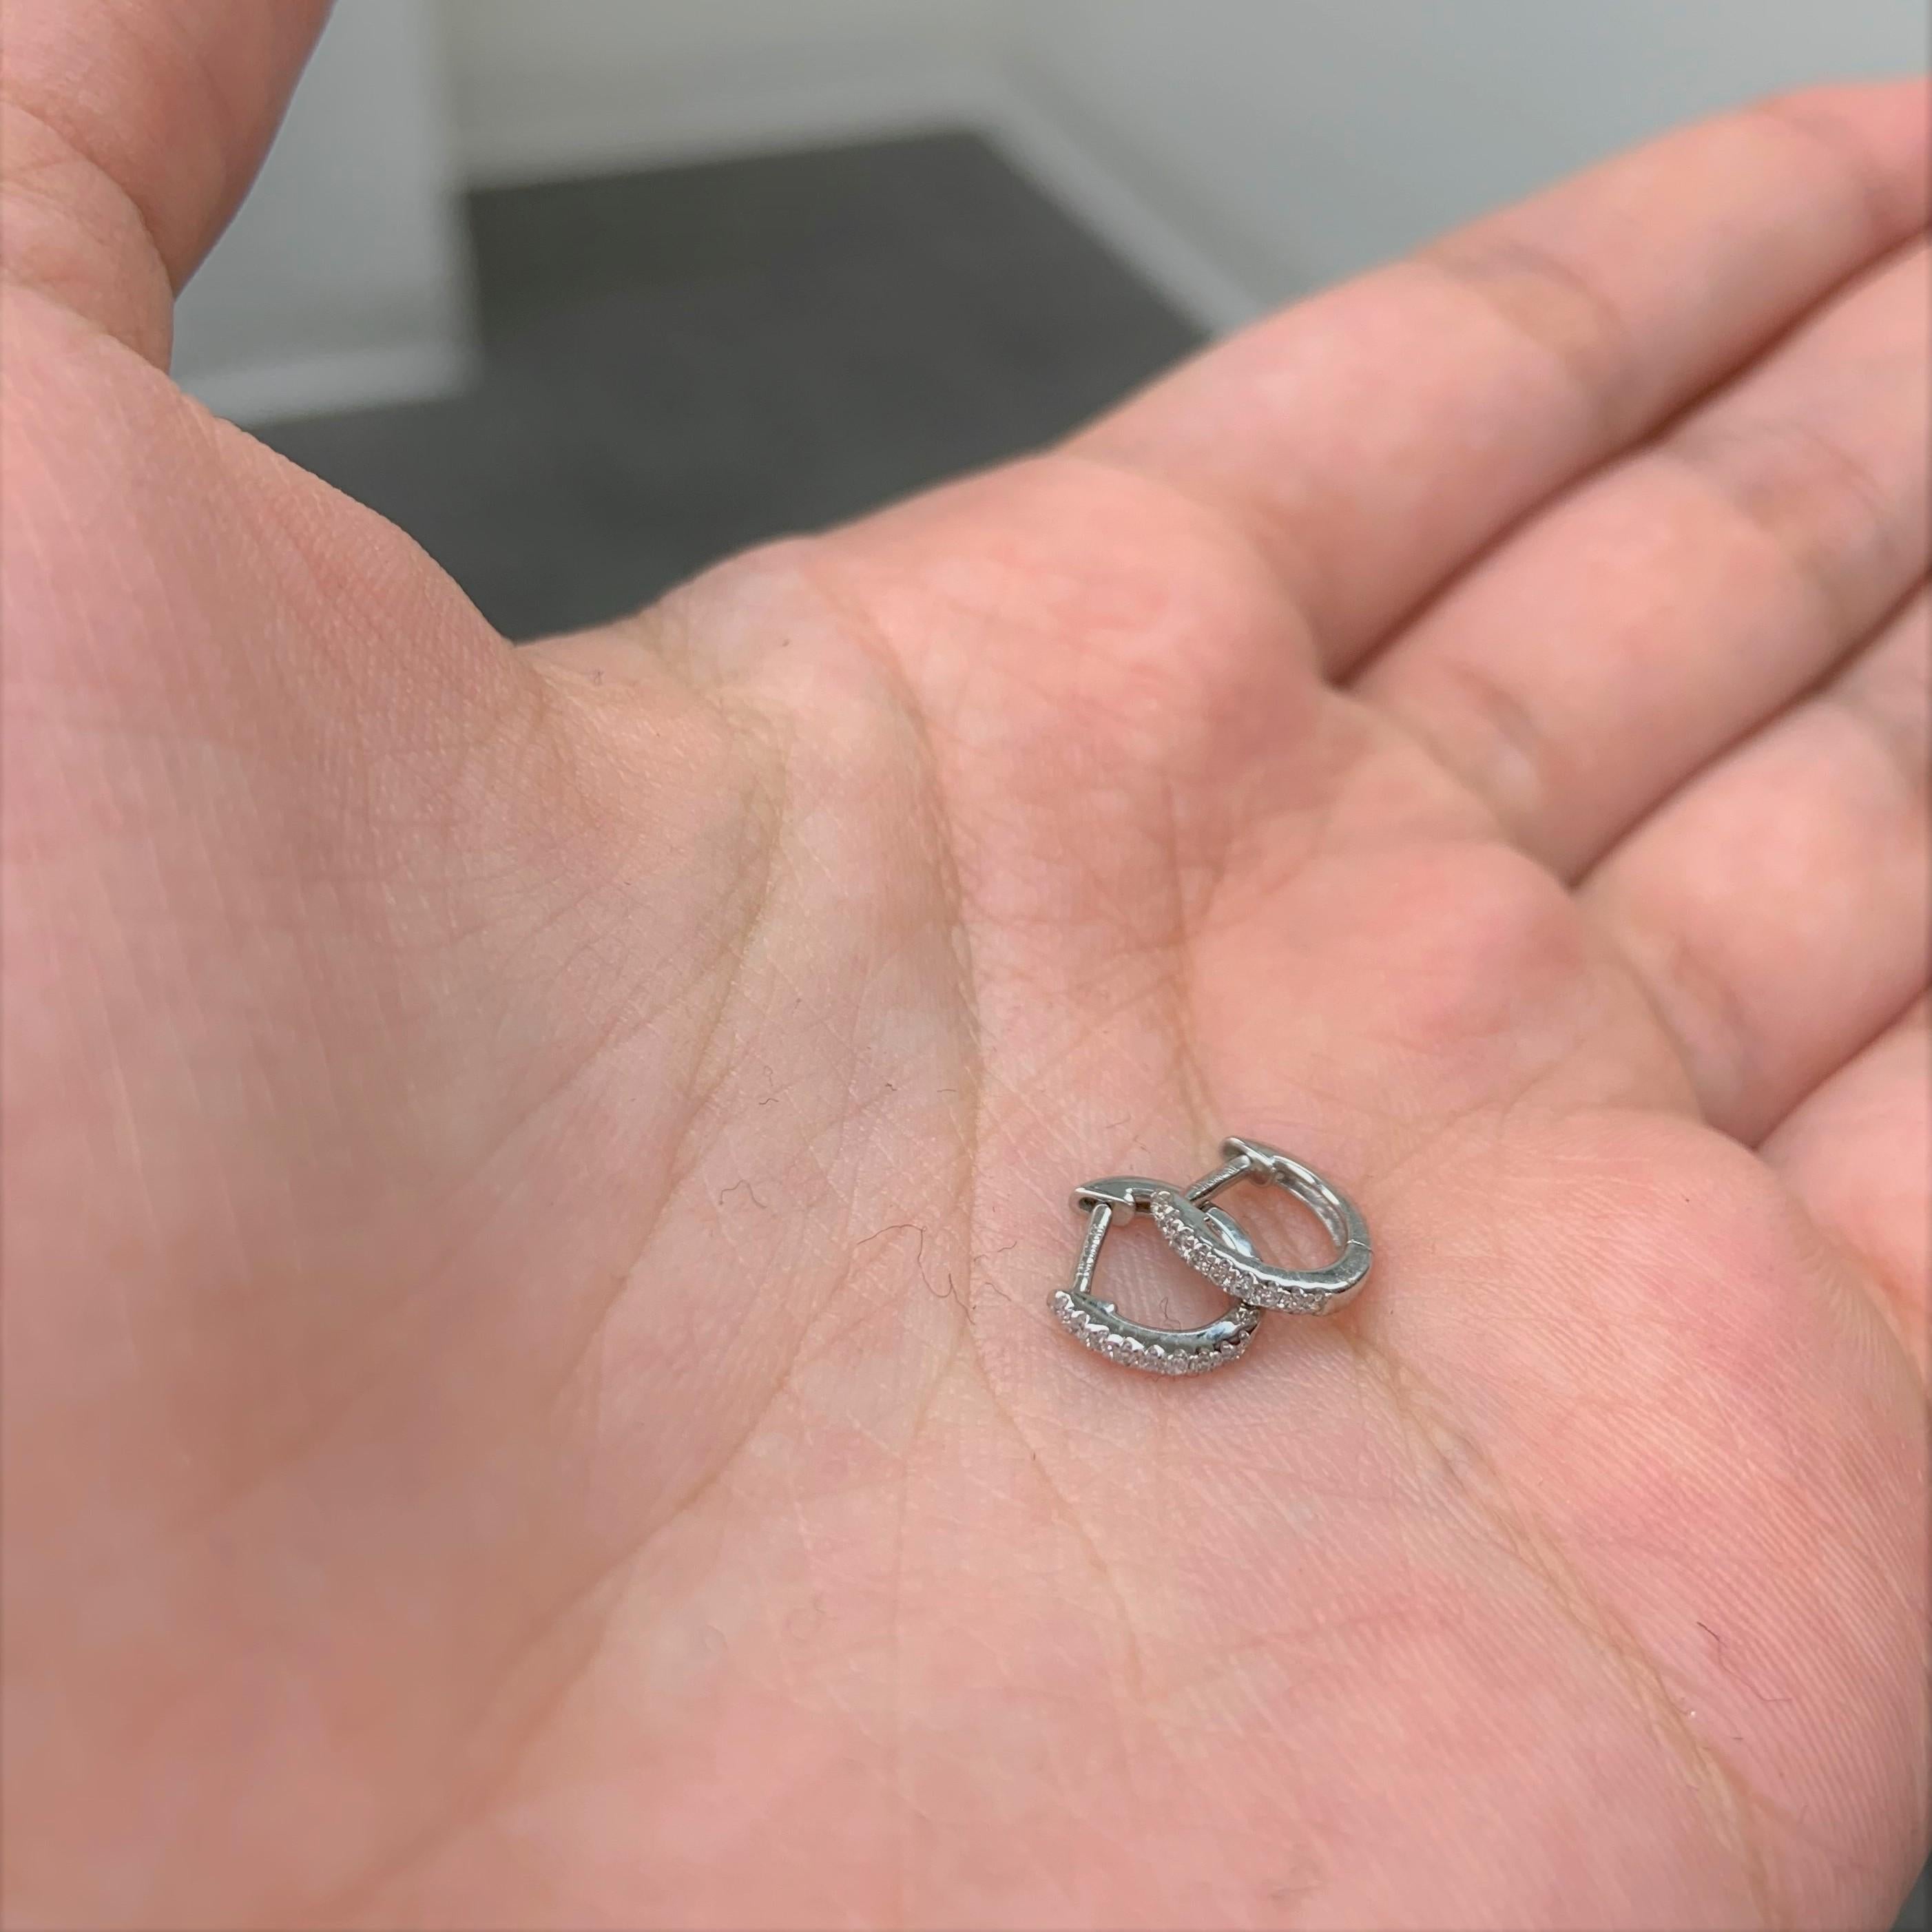 0.05 carat diamond earrings